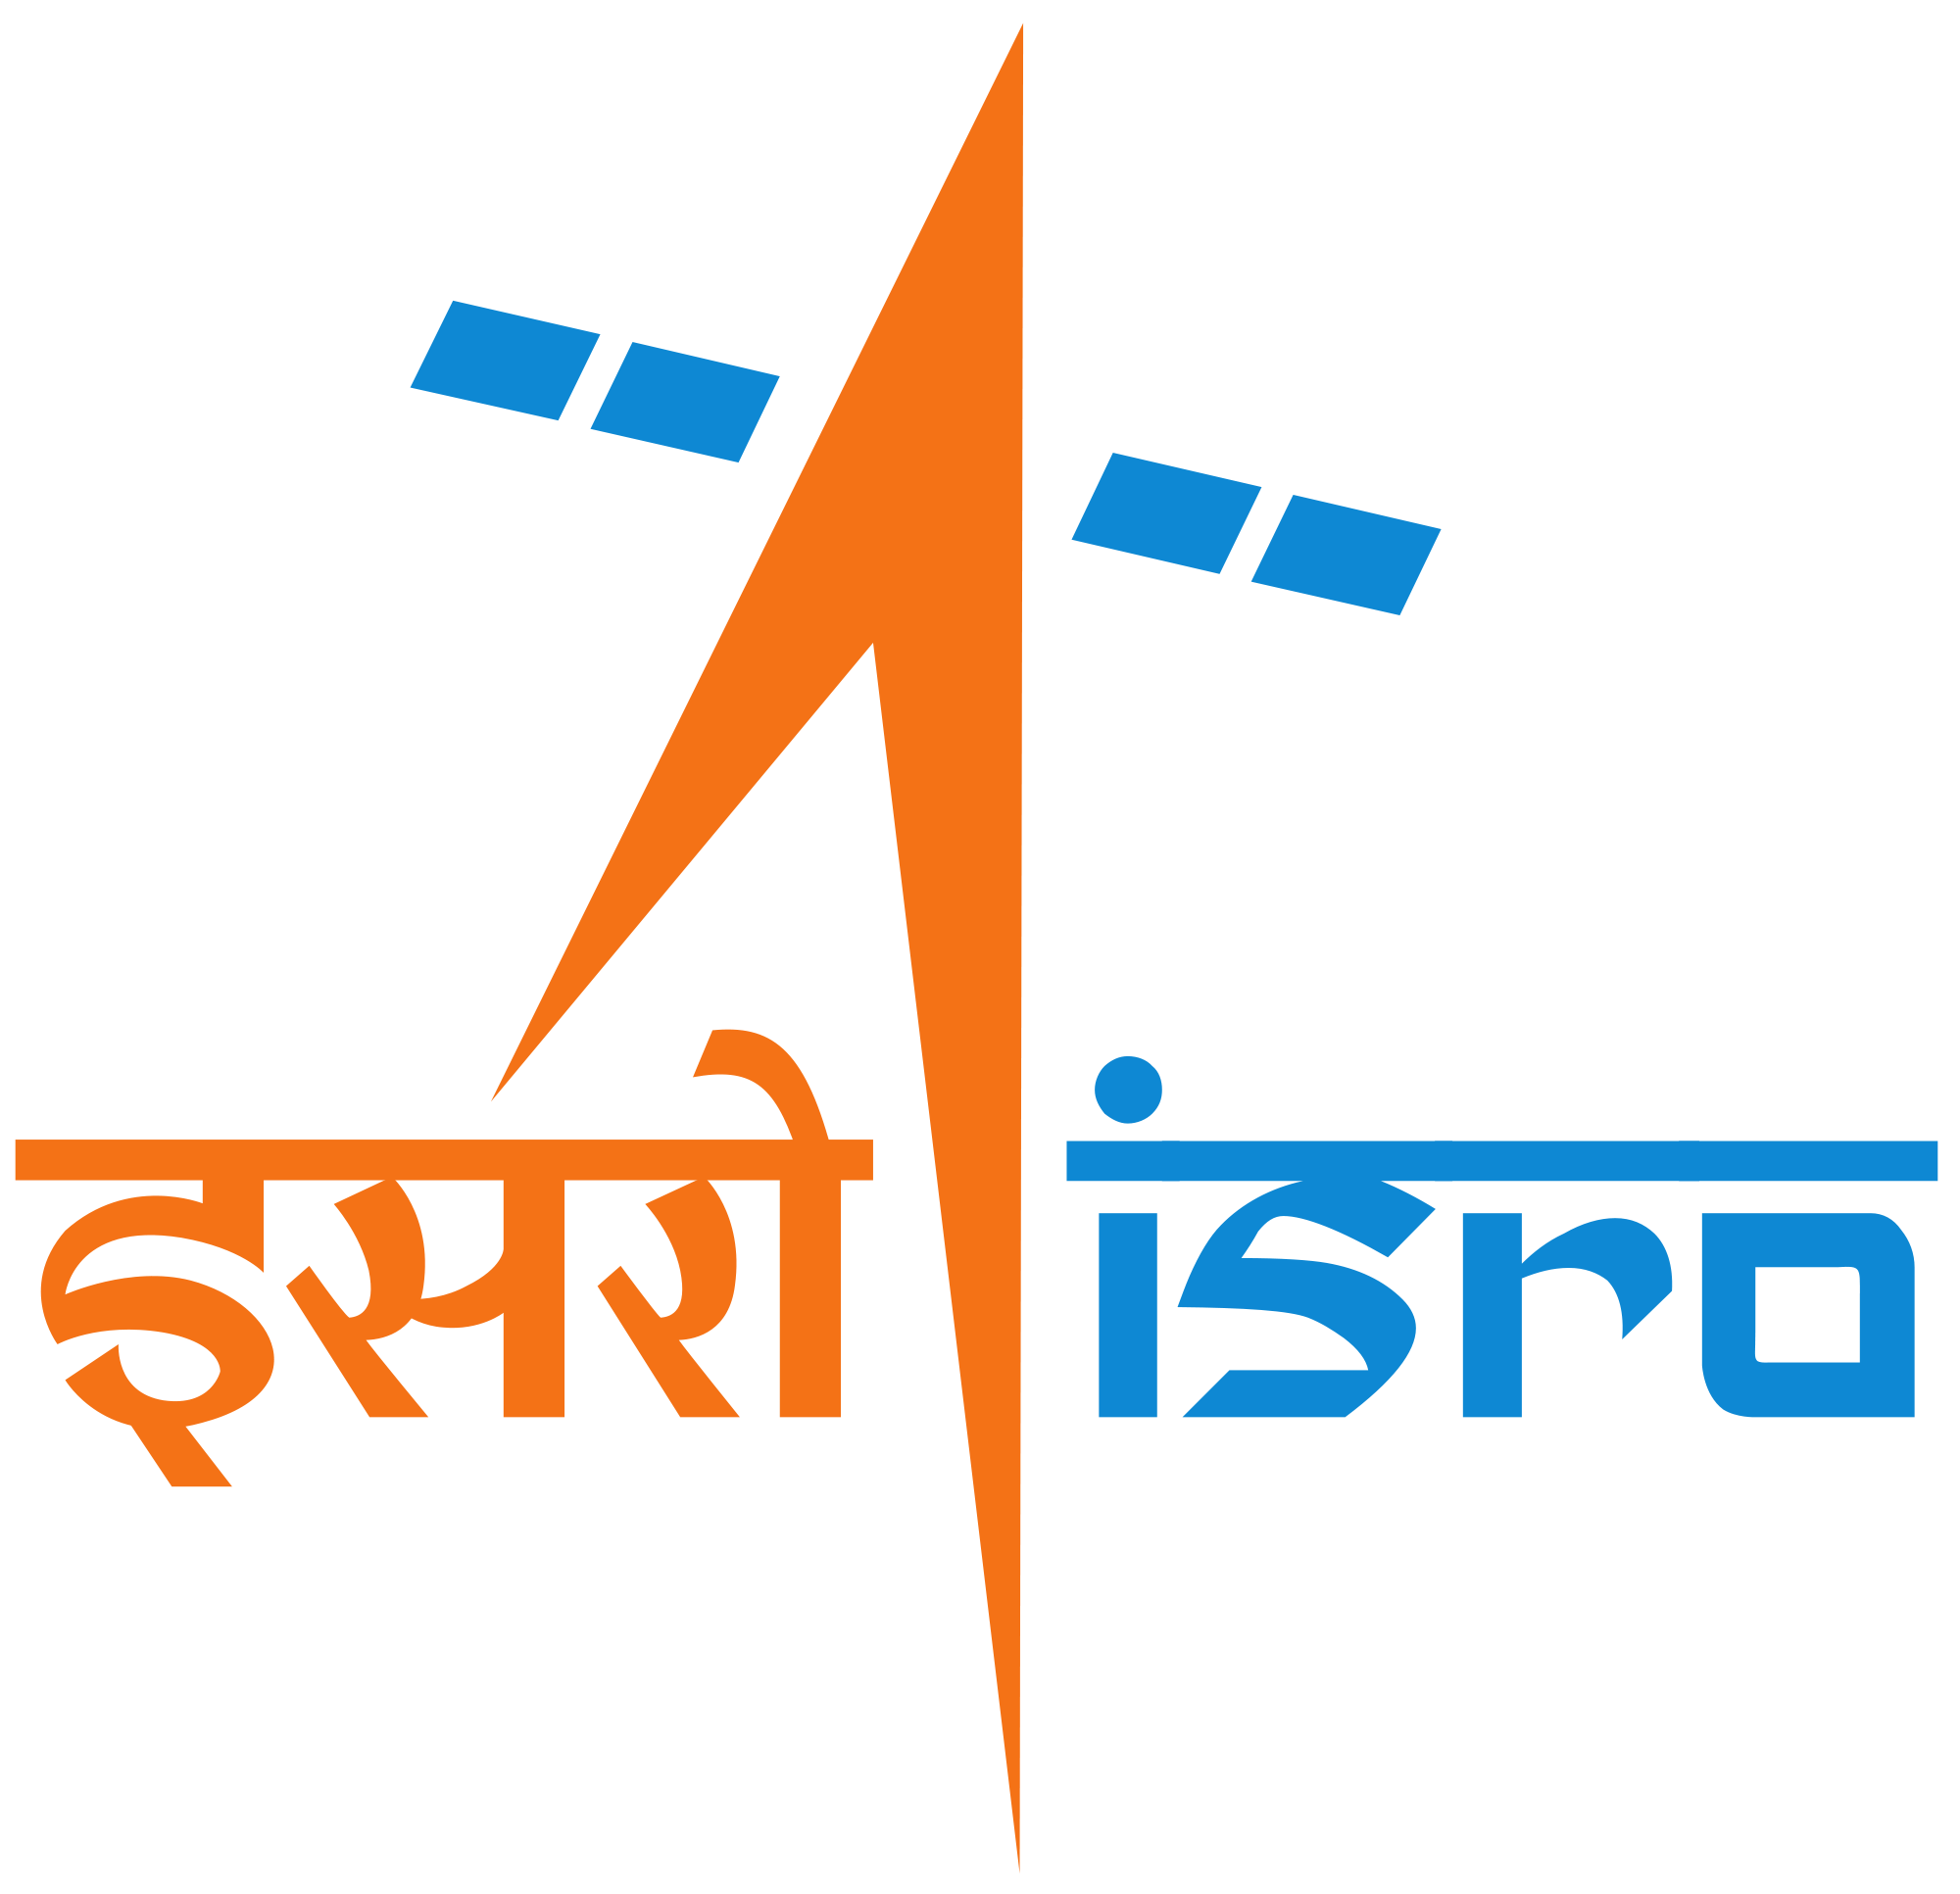 ISRO Logo Redesign by Abeer Rizvi on Dribbble